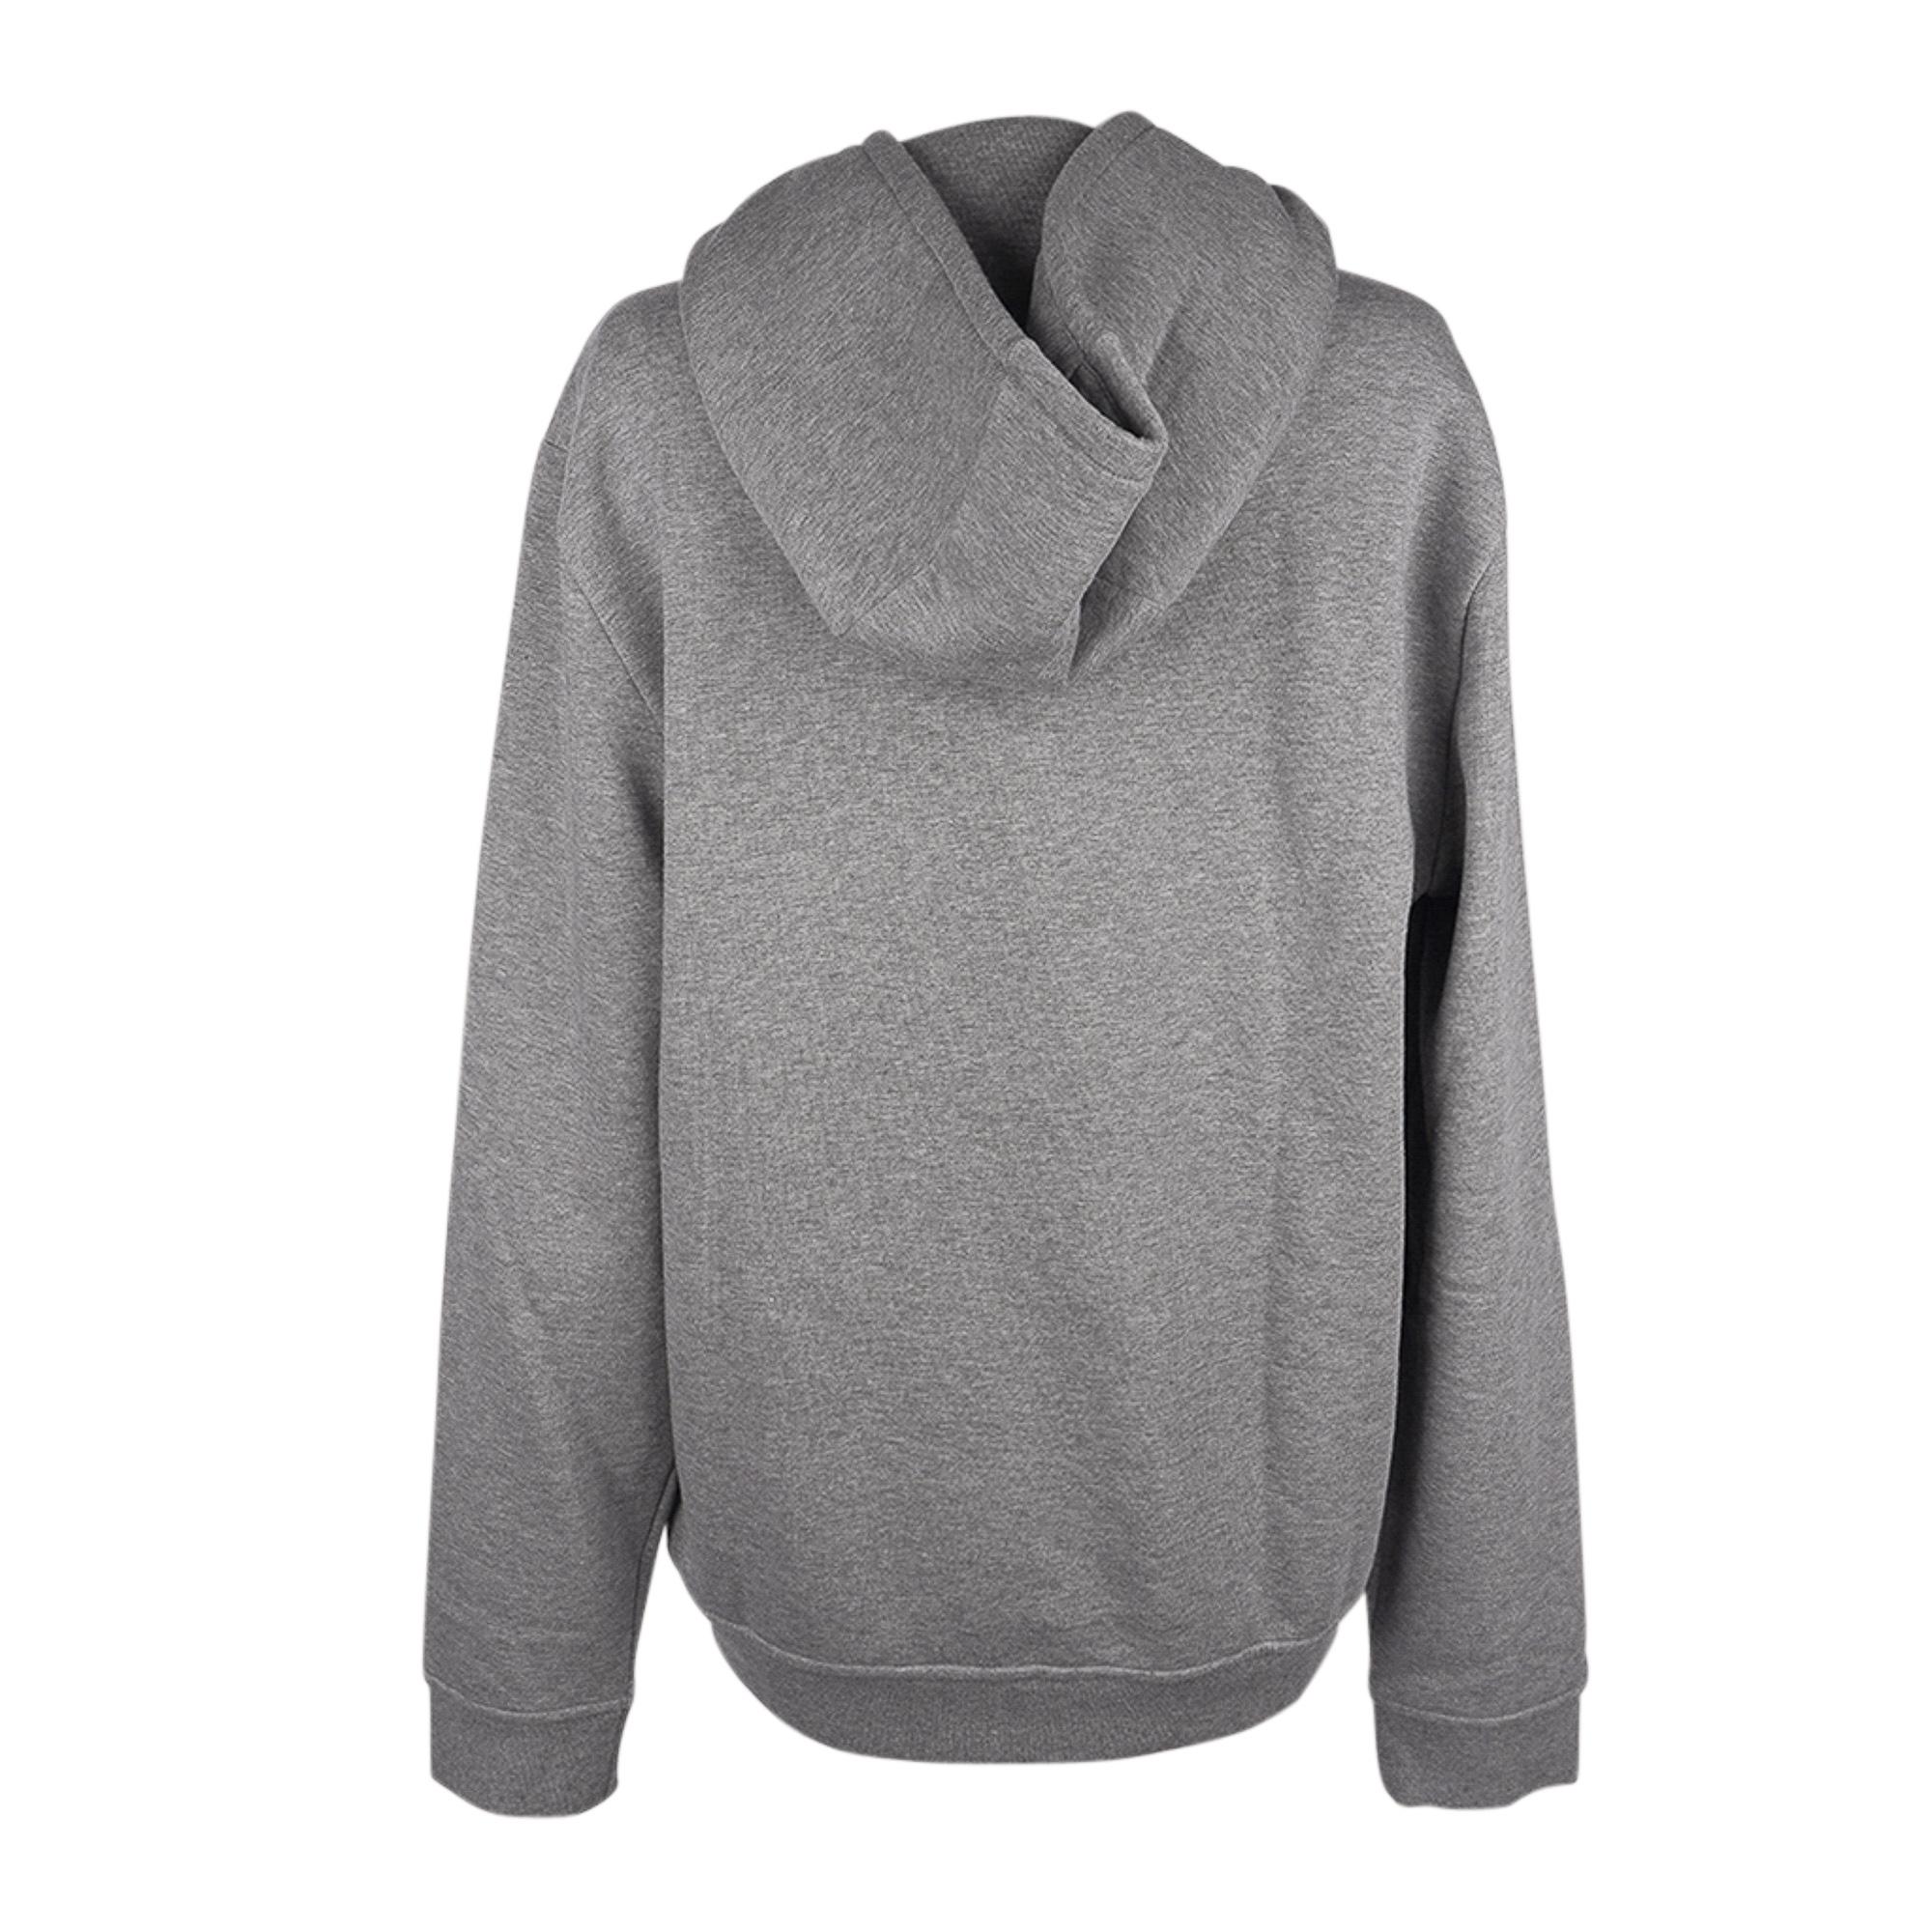 Hermes Men's Hooded Sweater w/ Leather Detail Gris Hoodie Sweatshirt L For Sale 6